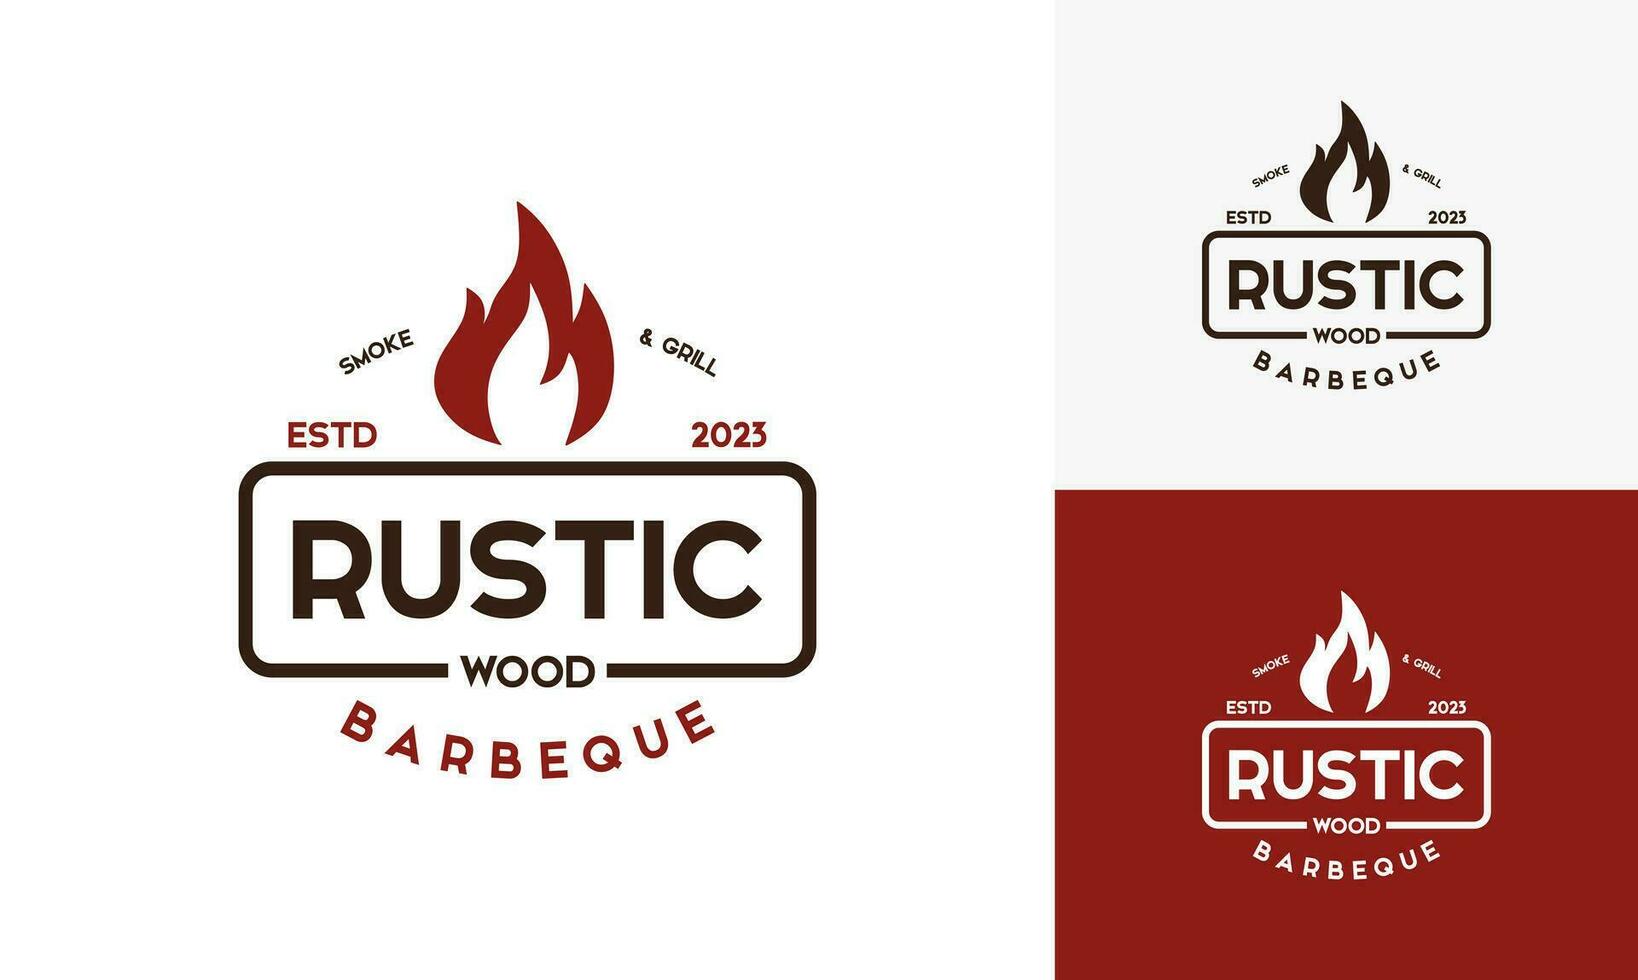 wijnoogst logo barbecue grillen. retro rustiek babeque grill, barbecue etiket logo desain vector. vector